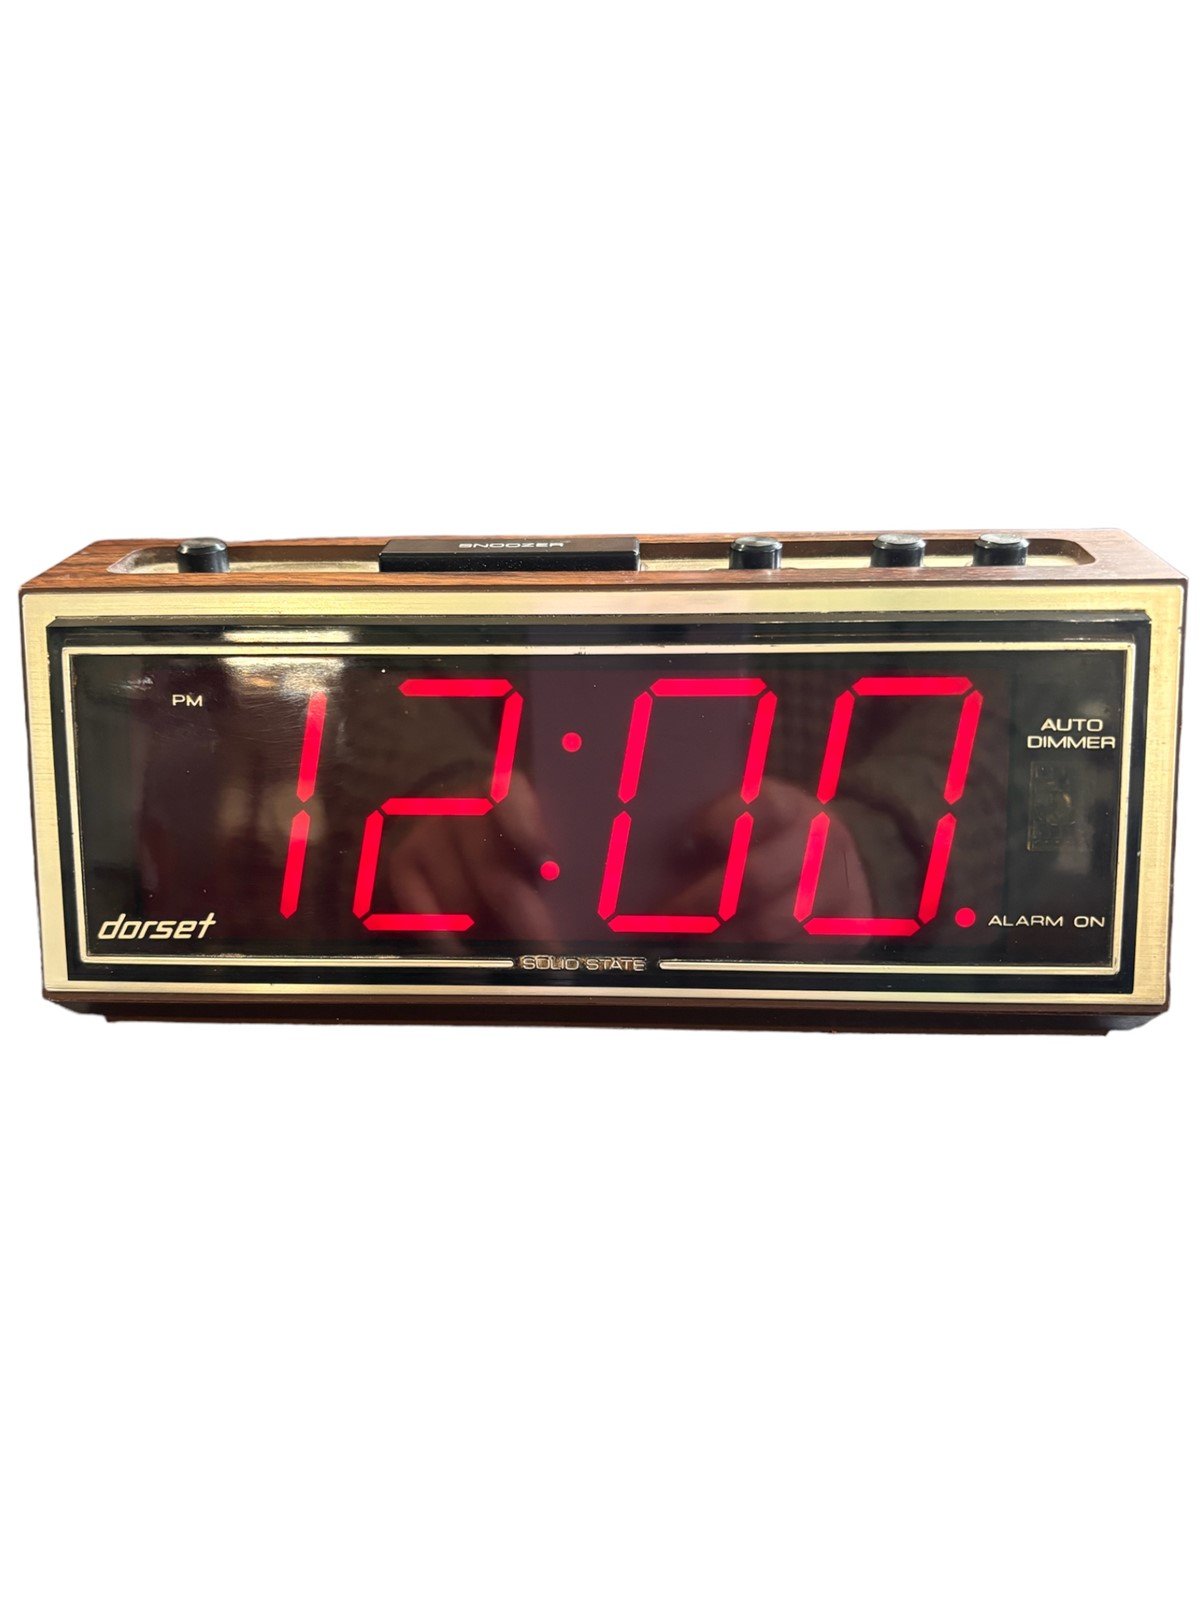 Dorset Solid State Alarm Clock Auto Dimmer Vintage